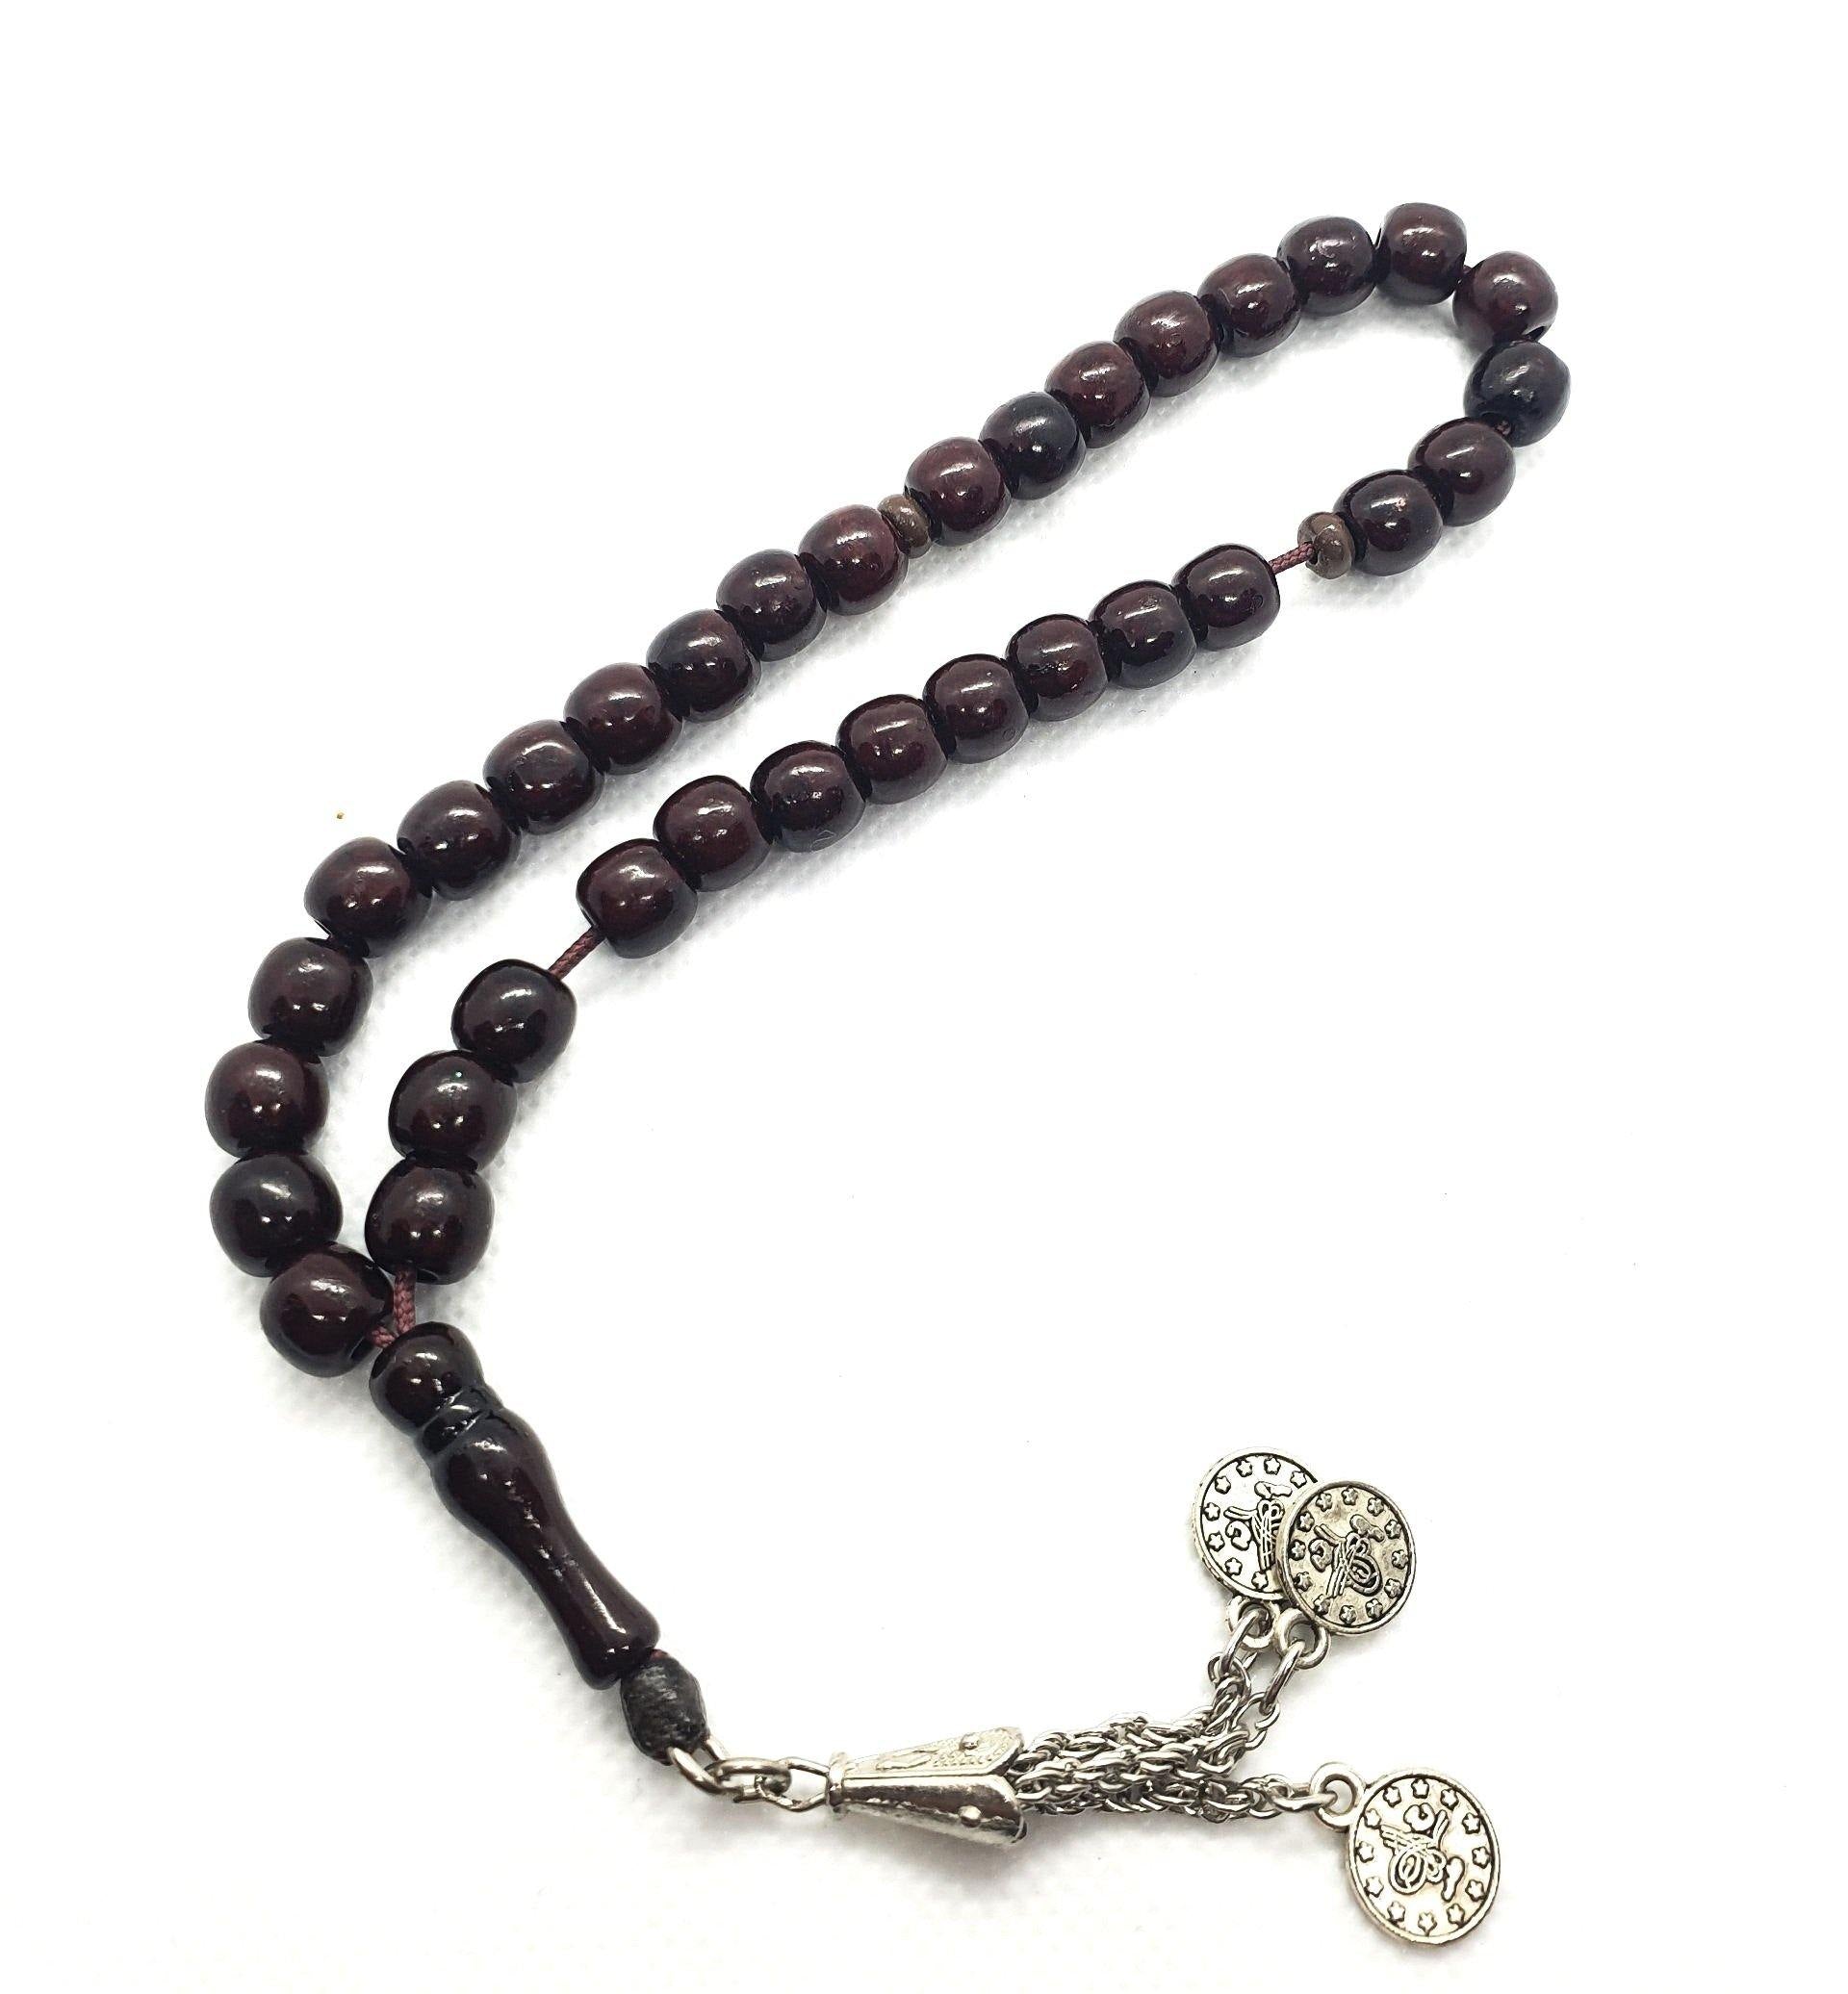 tasbih-tesbih-lrv-gemstone-prayer-meditation-beads-bespoke-custom-made-masters-yoga-spiritual-handmade